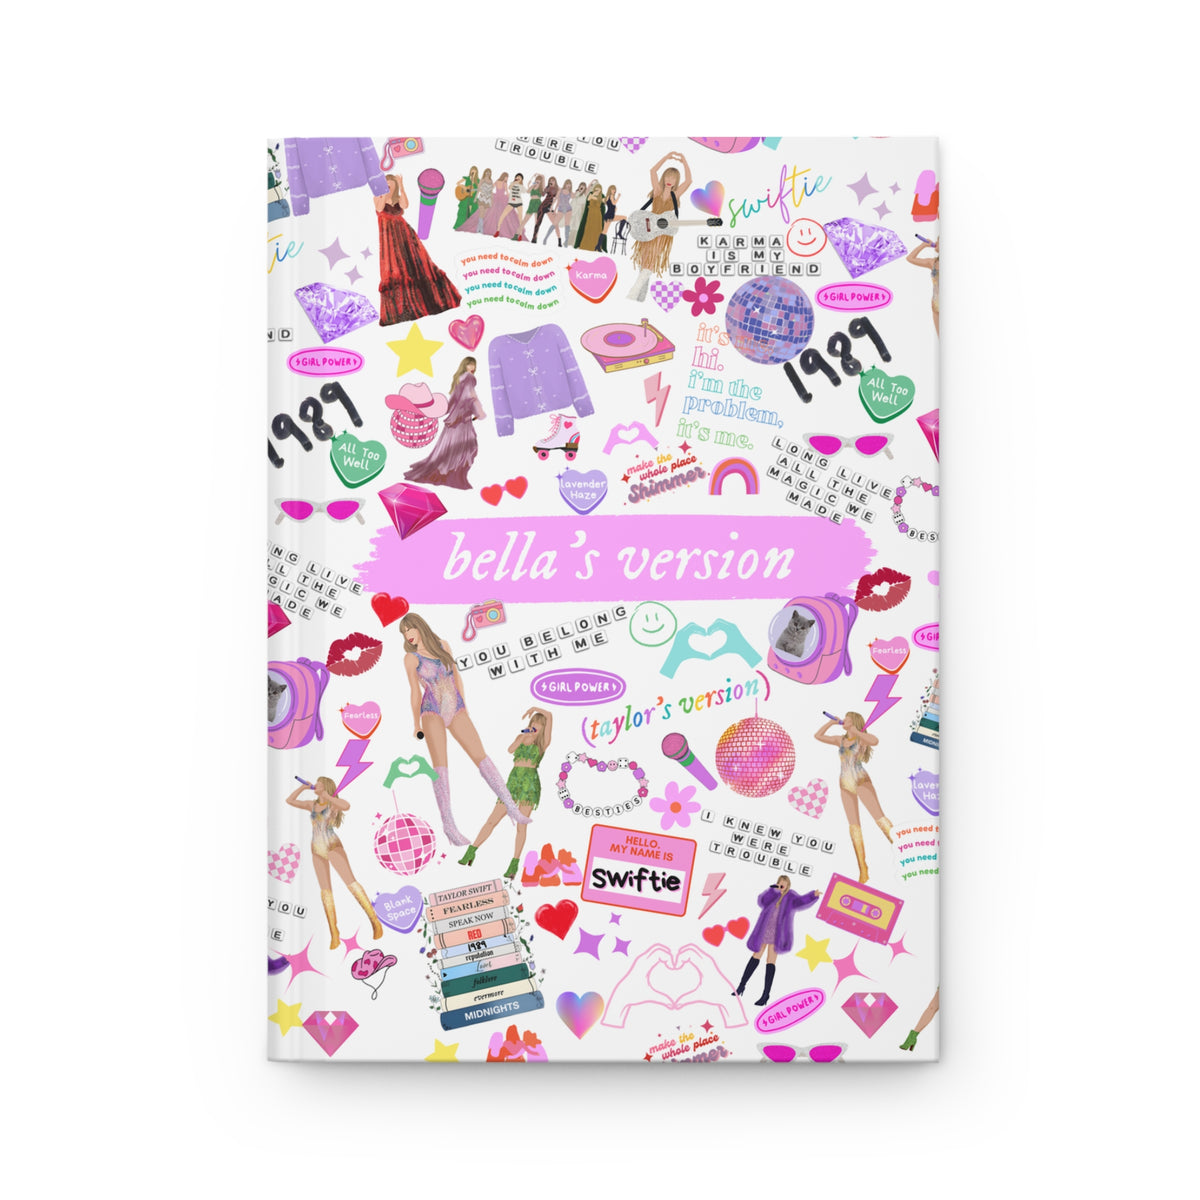 Taylors Version Personalized Journal Eras Inspired Music Fan Matte Journal Swifty TS Gift Concert Merch Notebook